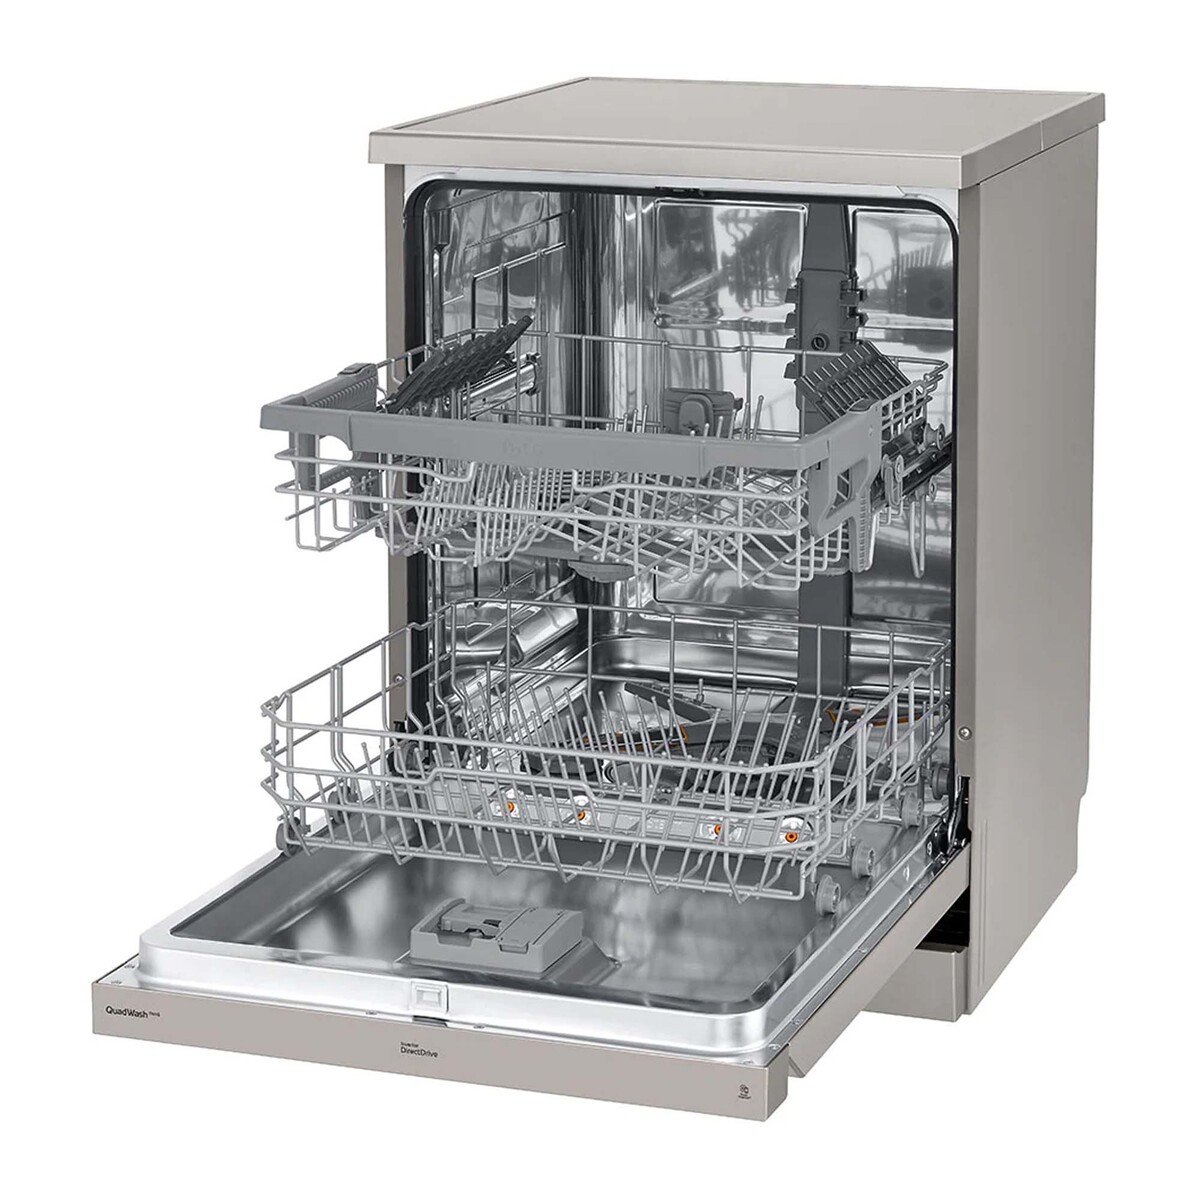 LG Dishwasher DFC532FP 14 Place,10 Programs, Platinum Silver